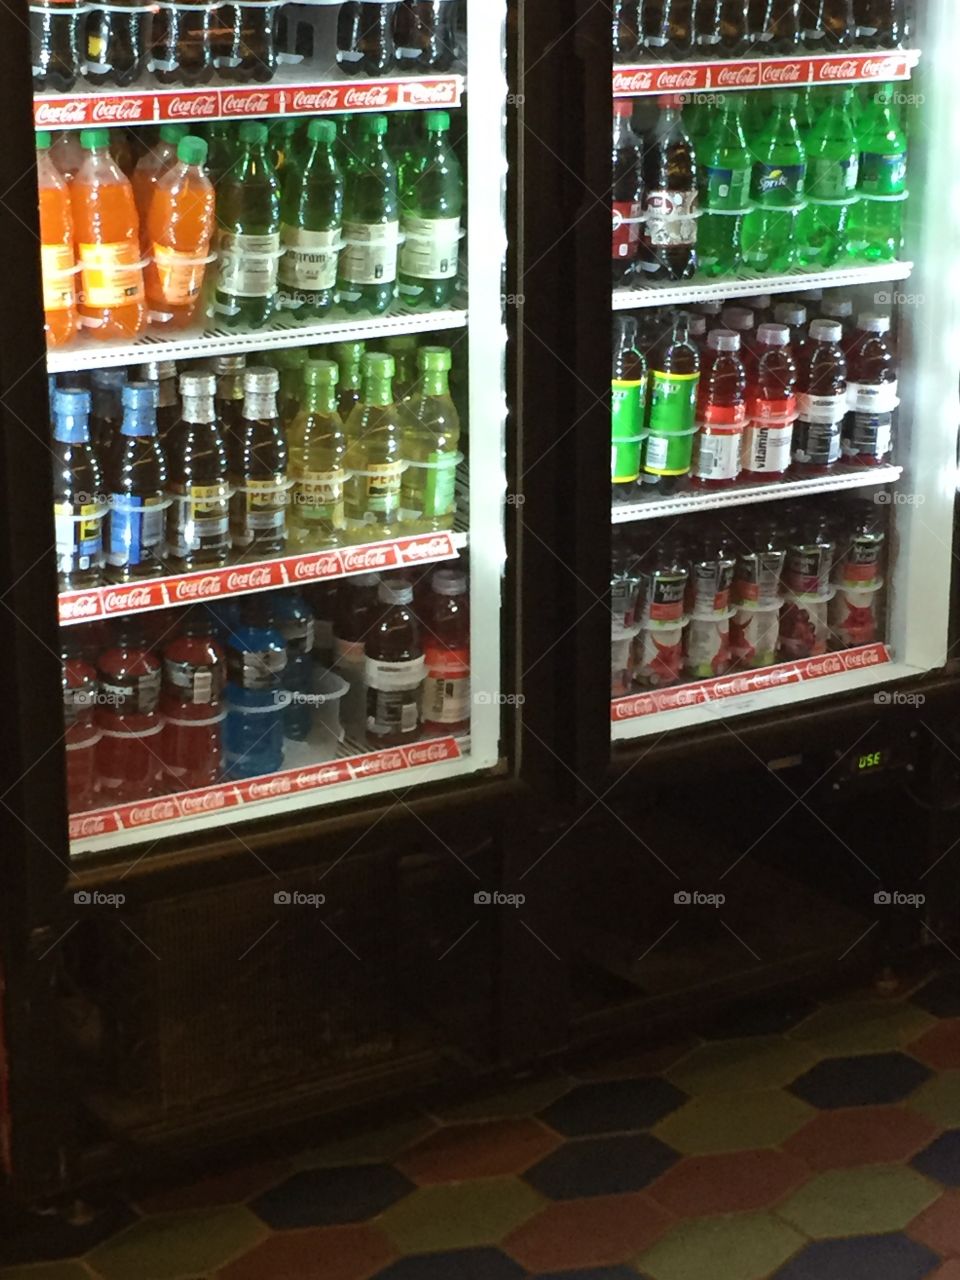 Resturant / store beverage refrigerator filled with many soda pop drink bottles. 